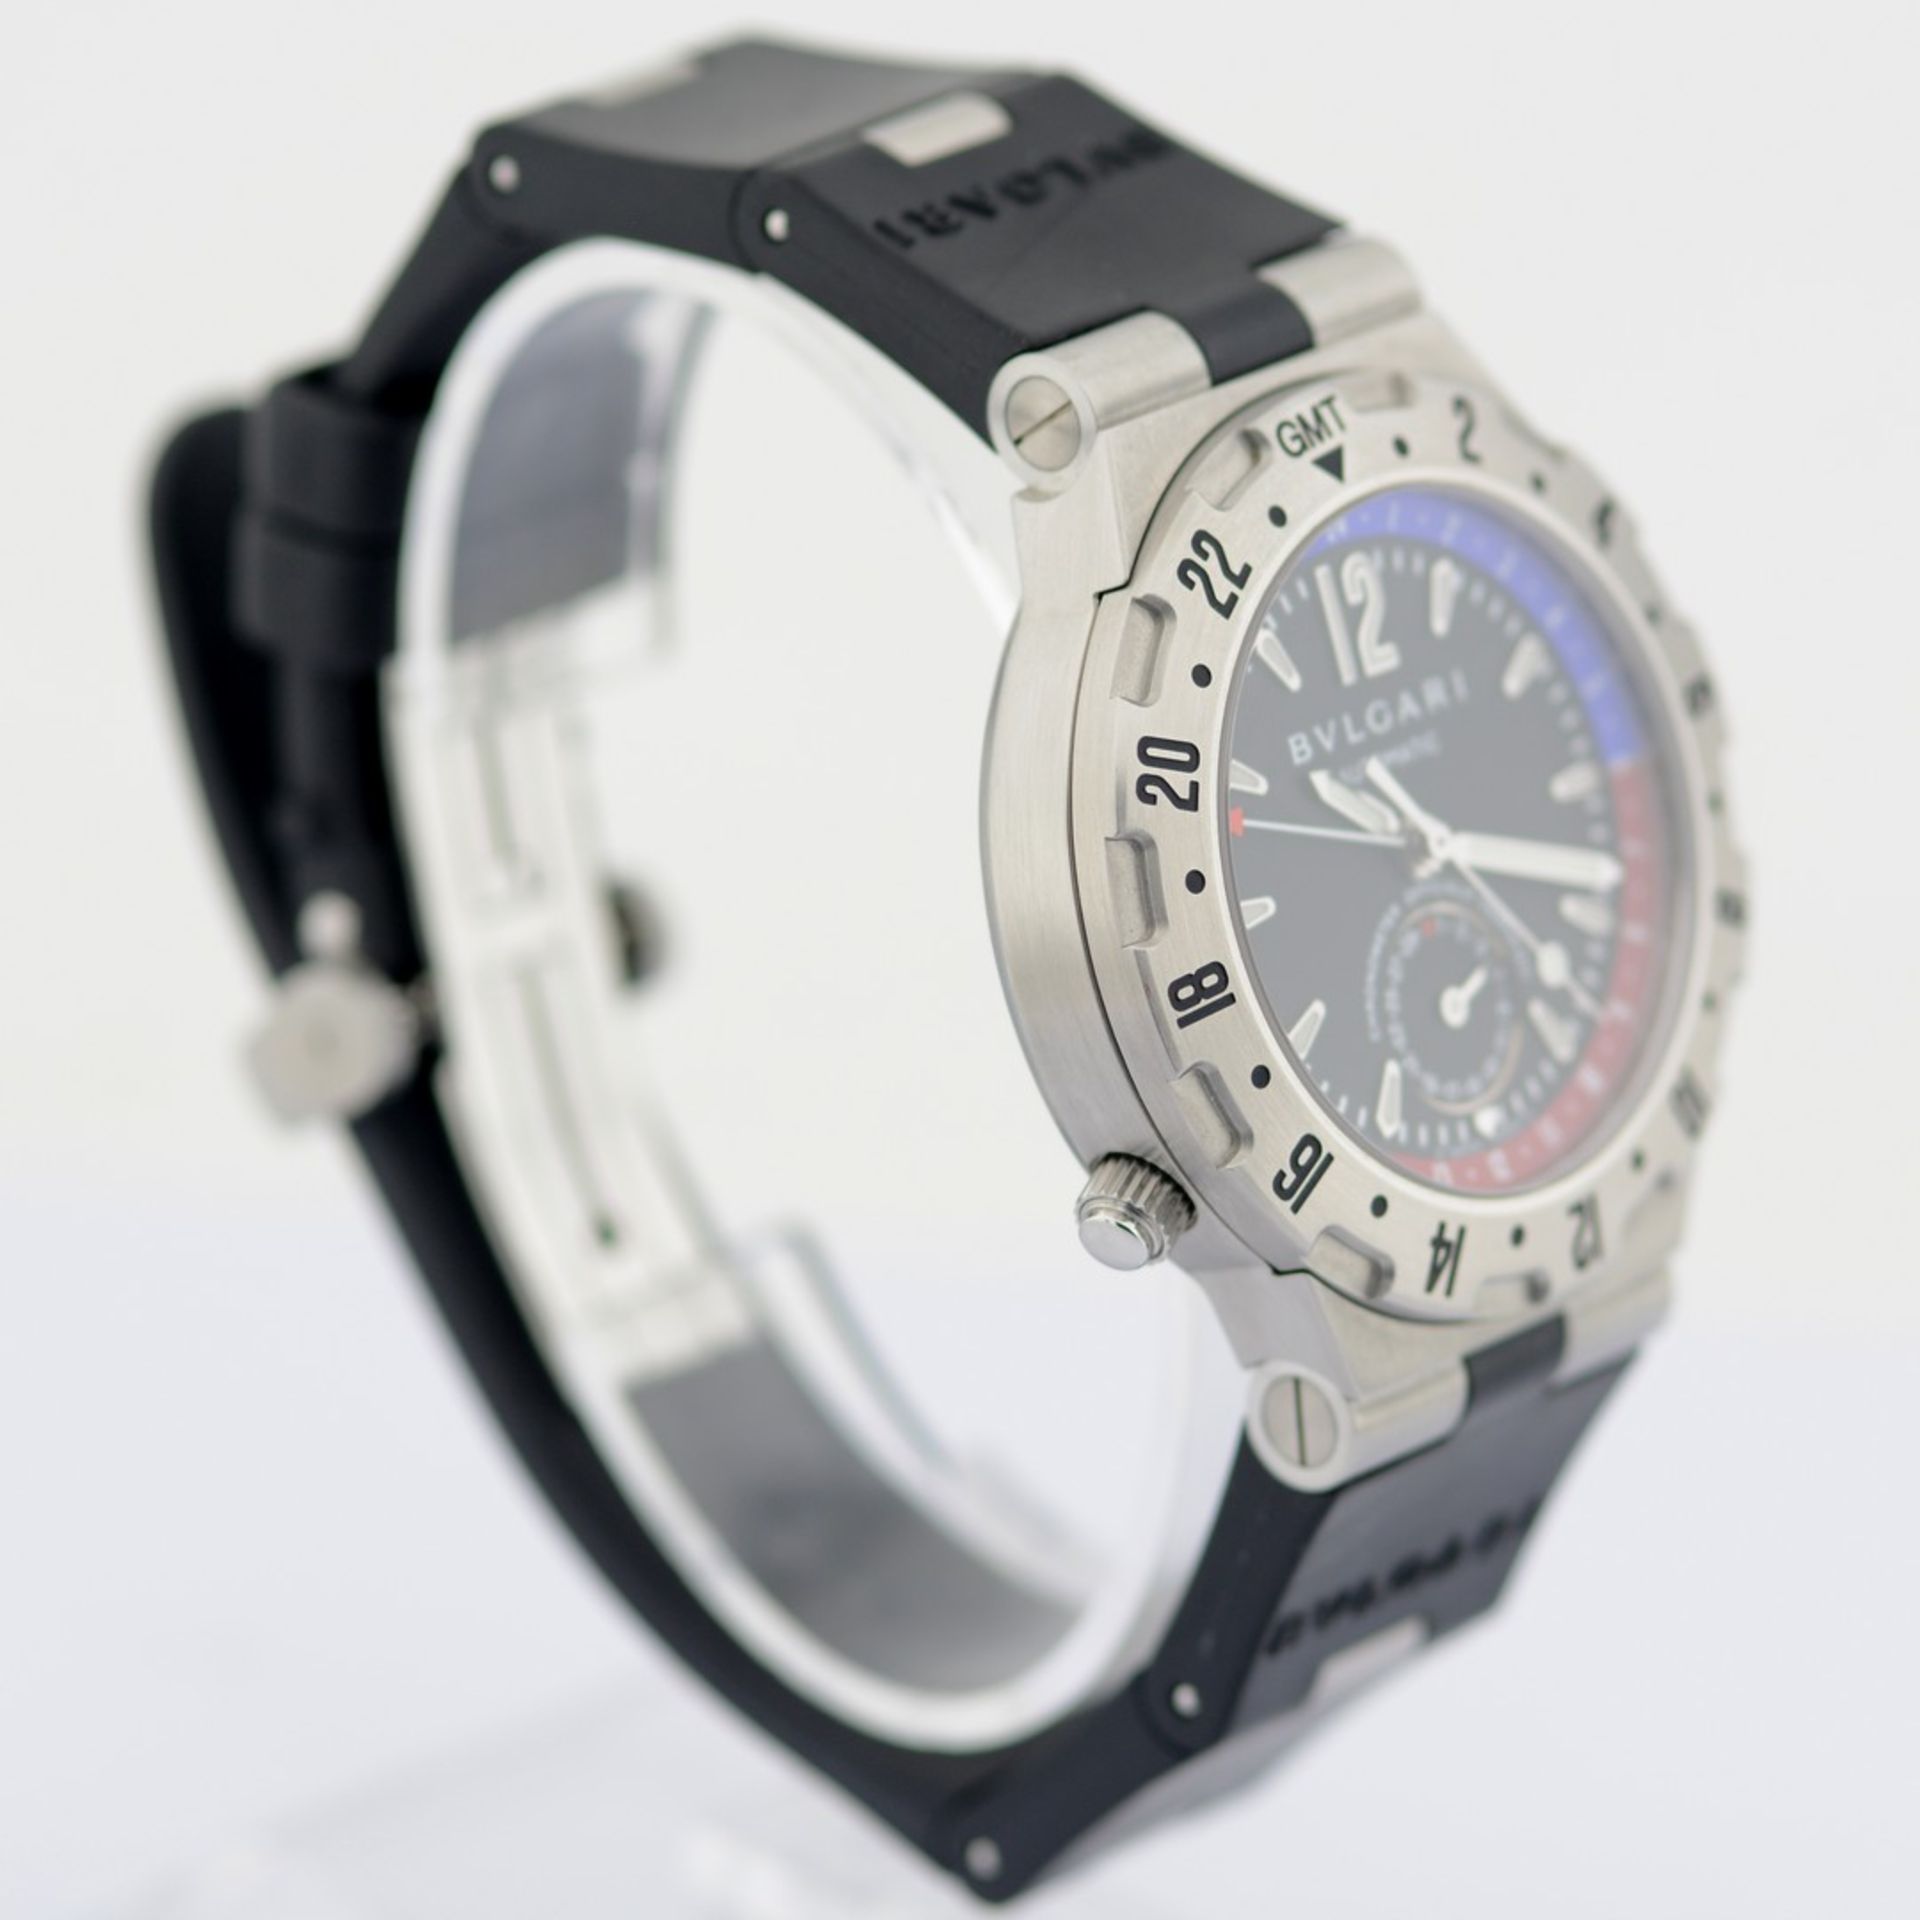 Bulgari / Diagono Professional GMT - Gentlemen's Steel Wrist Watch - Image 4 of 9